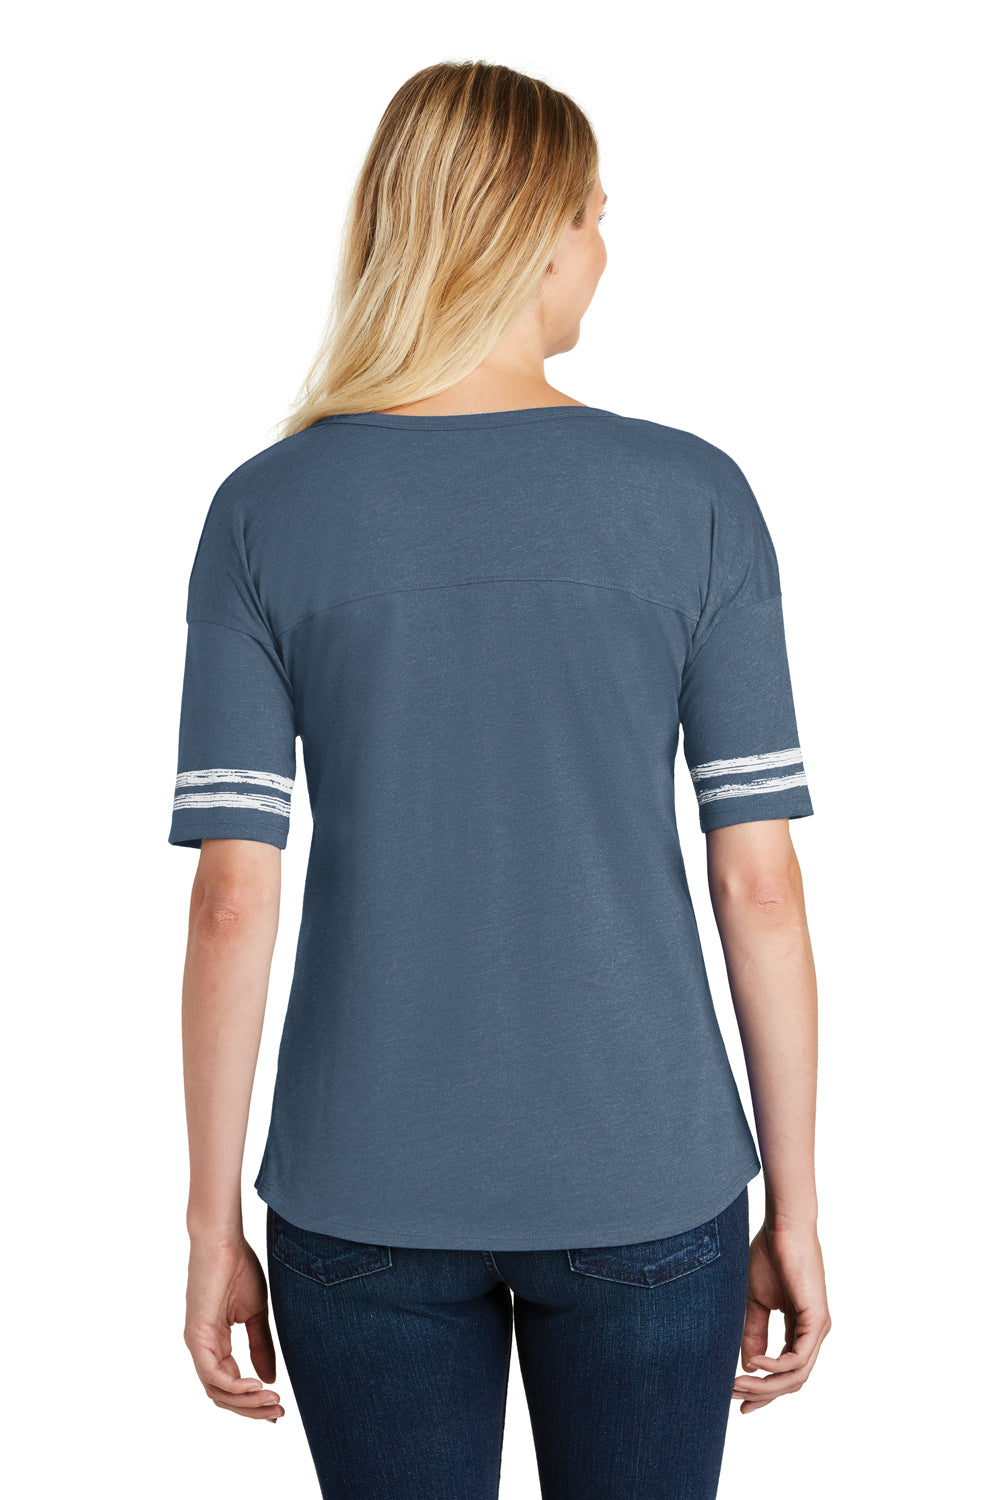 District DT487 Womens Scorecard Short Sleeve Crewneck T-Shirt Heather Navy Blue/White Back